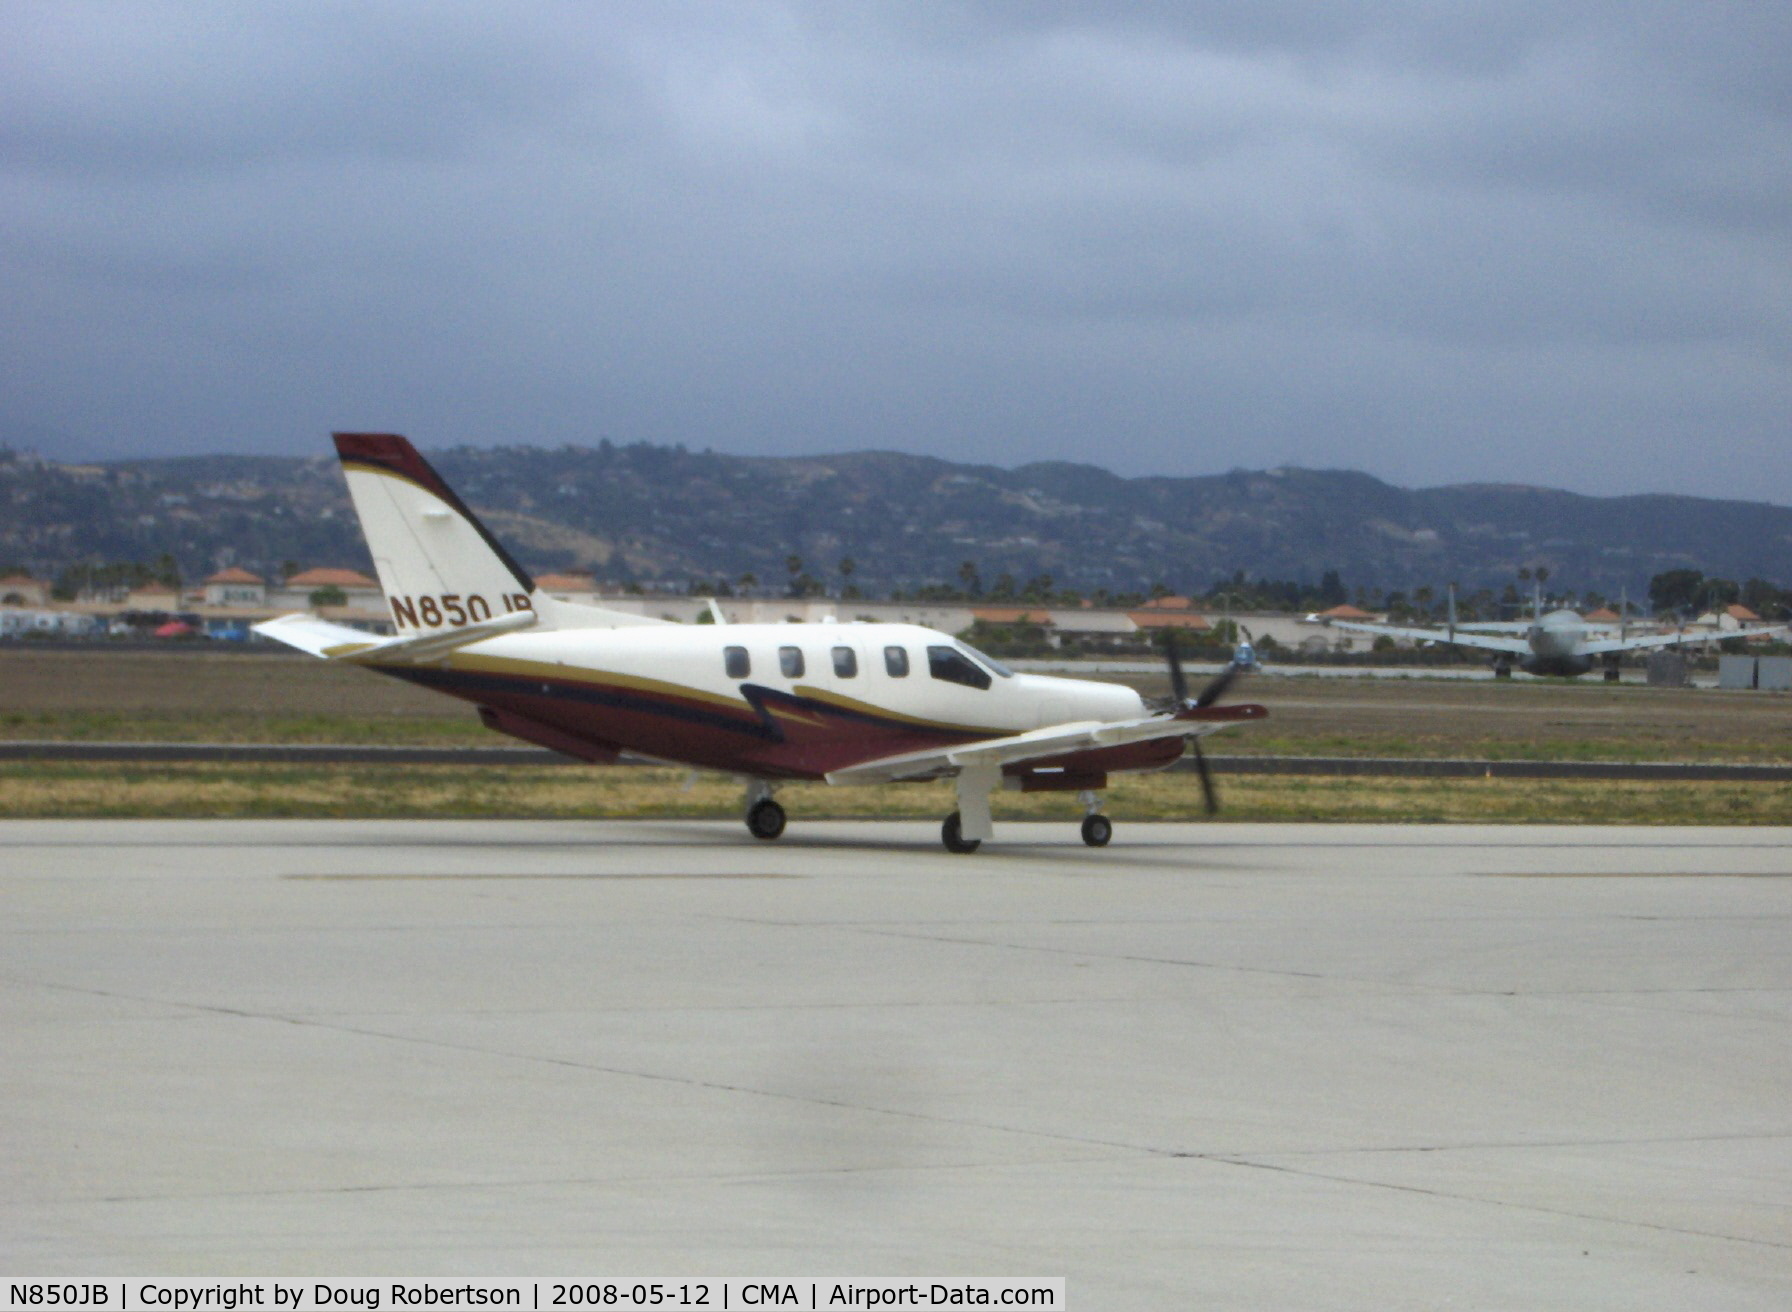 N850JB, 2006 Socata TBM-700 C/N 365, 2006 SOCATA TBM 700N (TBM 850), one Pratt & Whitney (Canada) PT6A-66D turboprop flat rated at 850 shp (limited to 700 shp for takeoff & landing), taxi